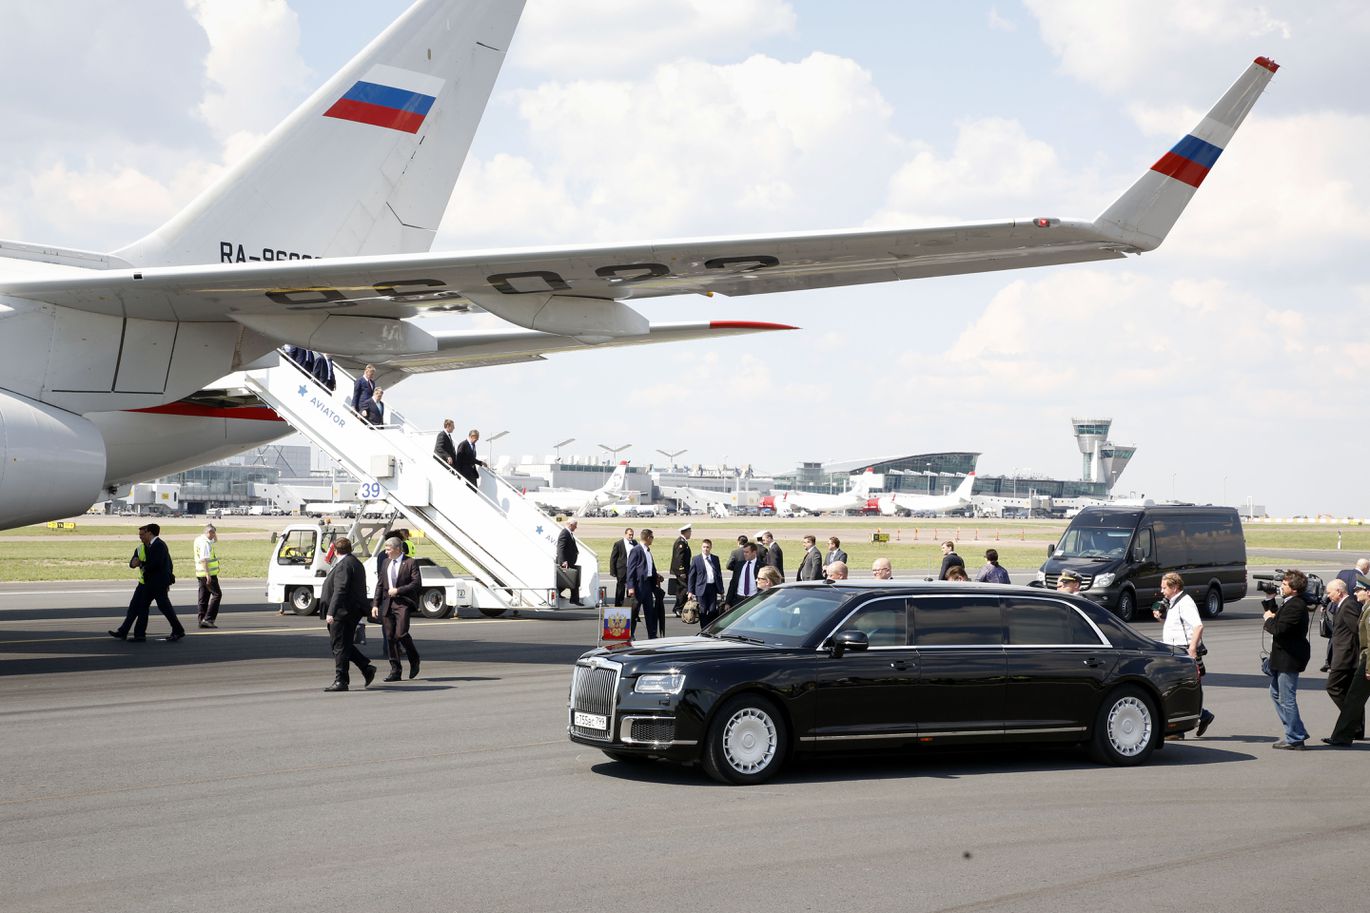 Борт 1 президента россии какой самолет марка фото номер